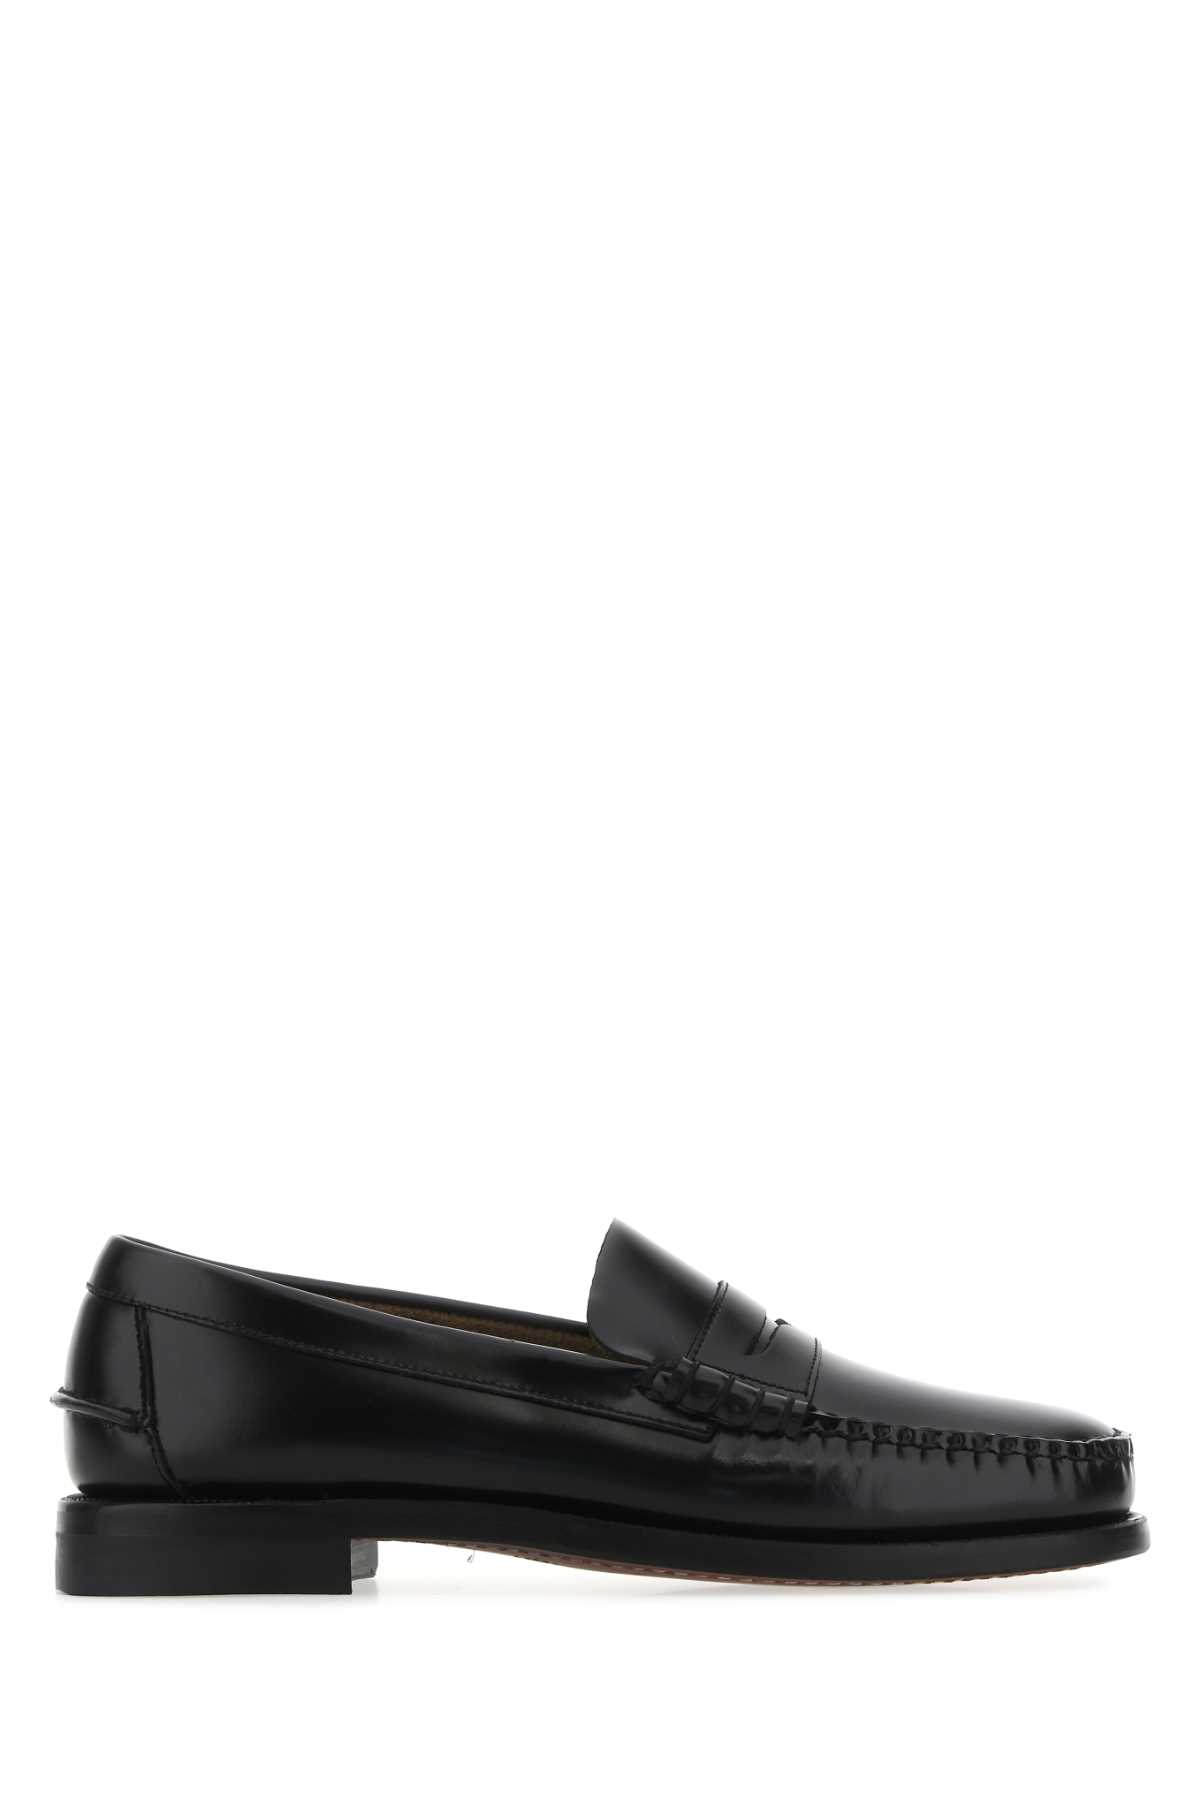 Shop Sebago Black Leather Classic Dan Loafers